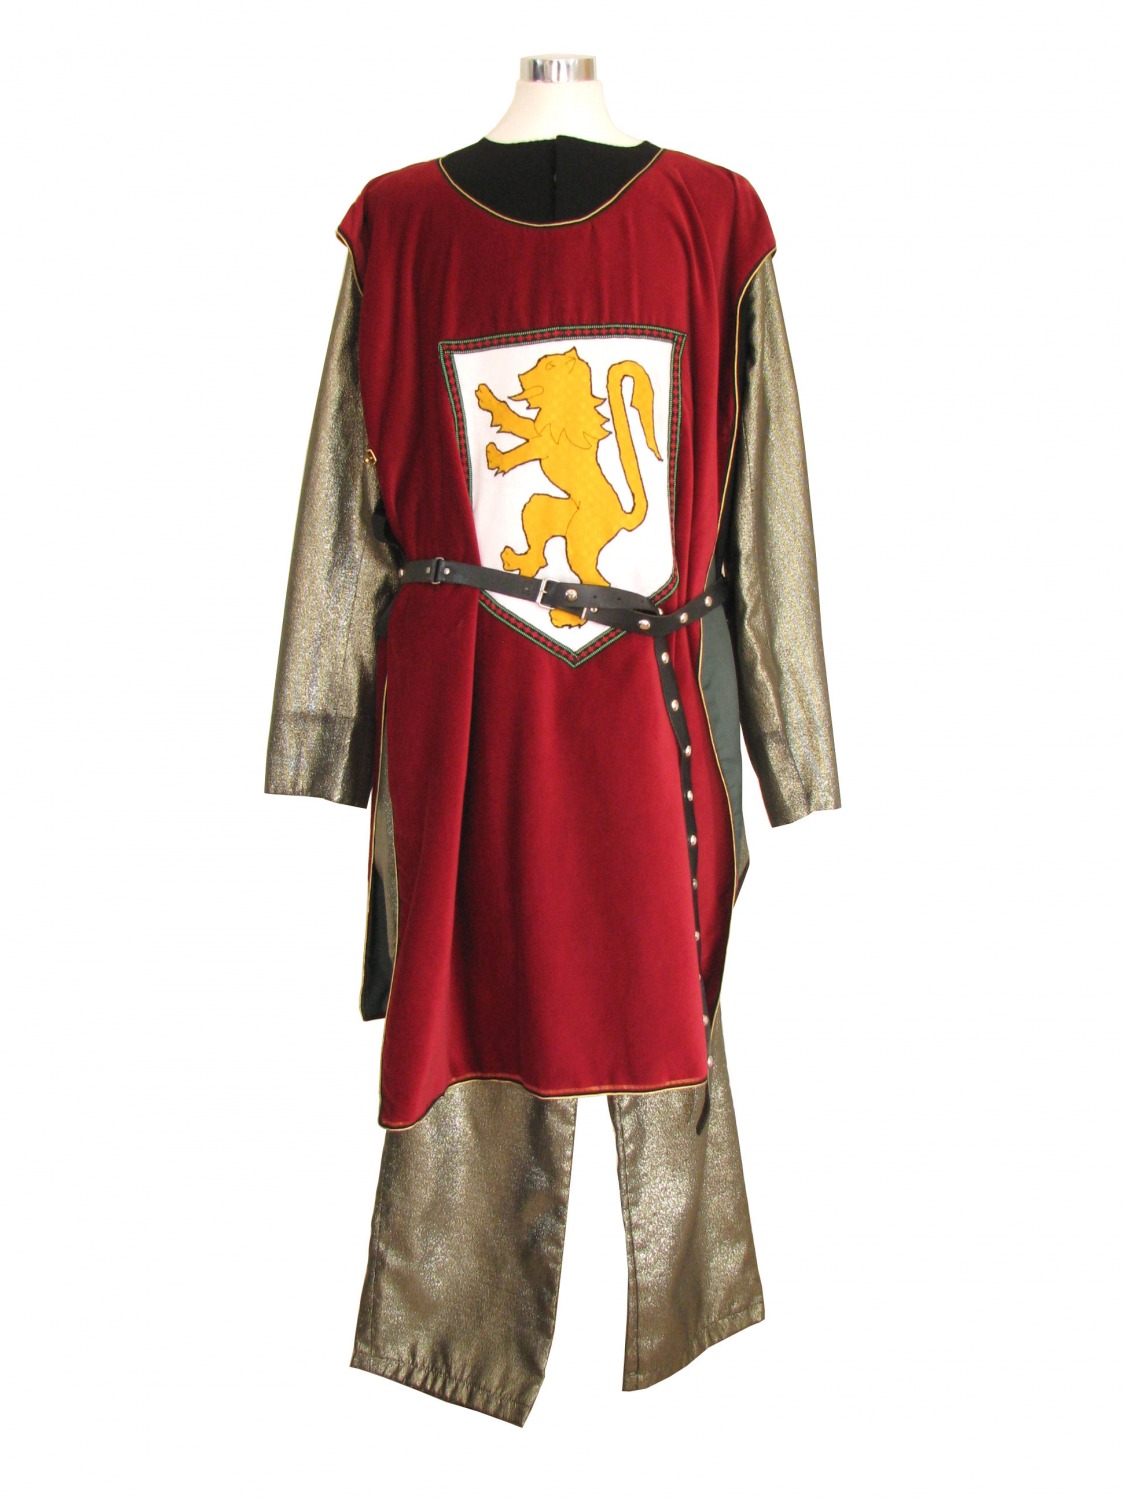 Men's Medieval King Arthur Costume Image. 